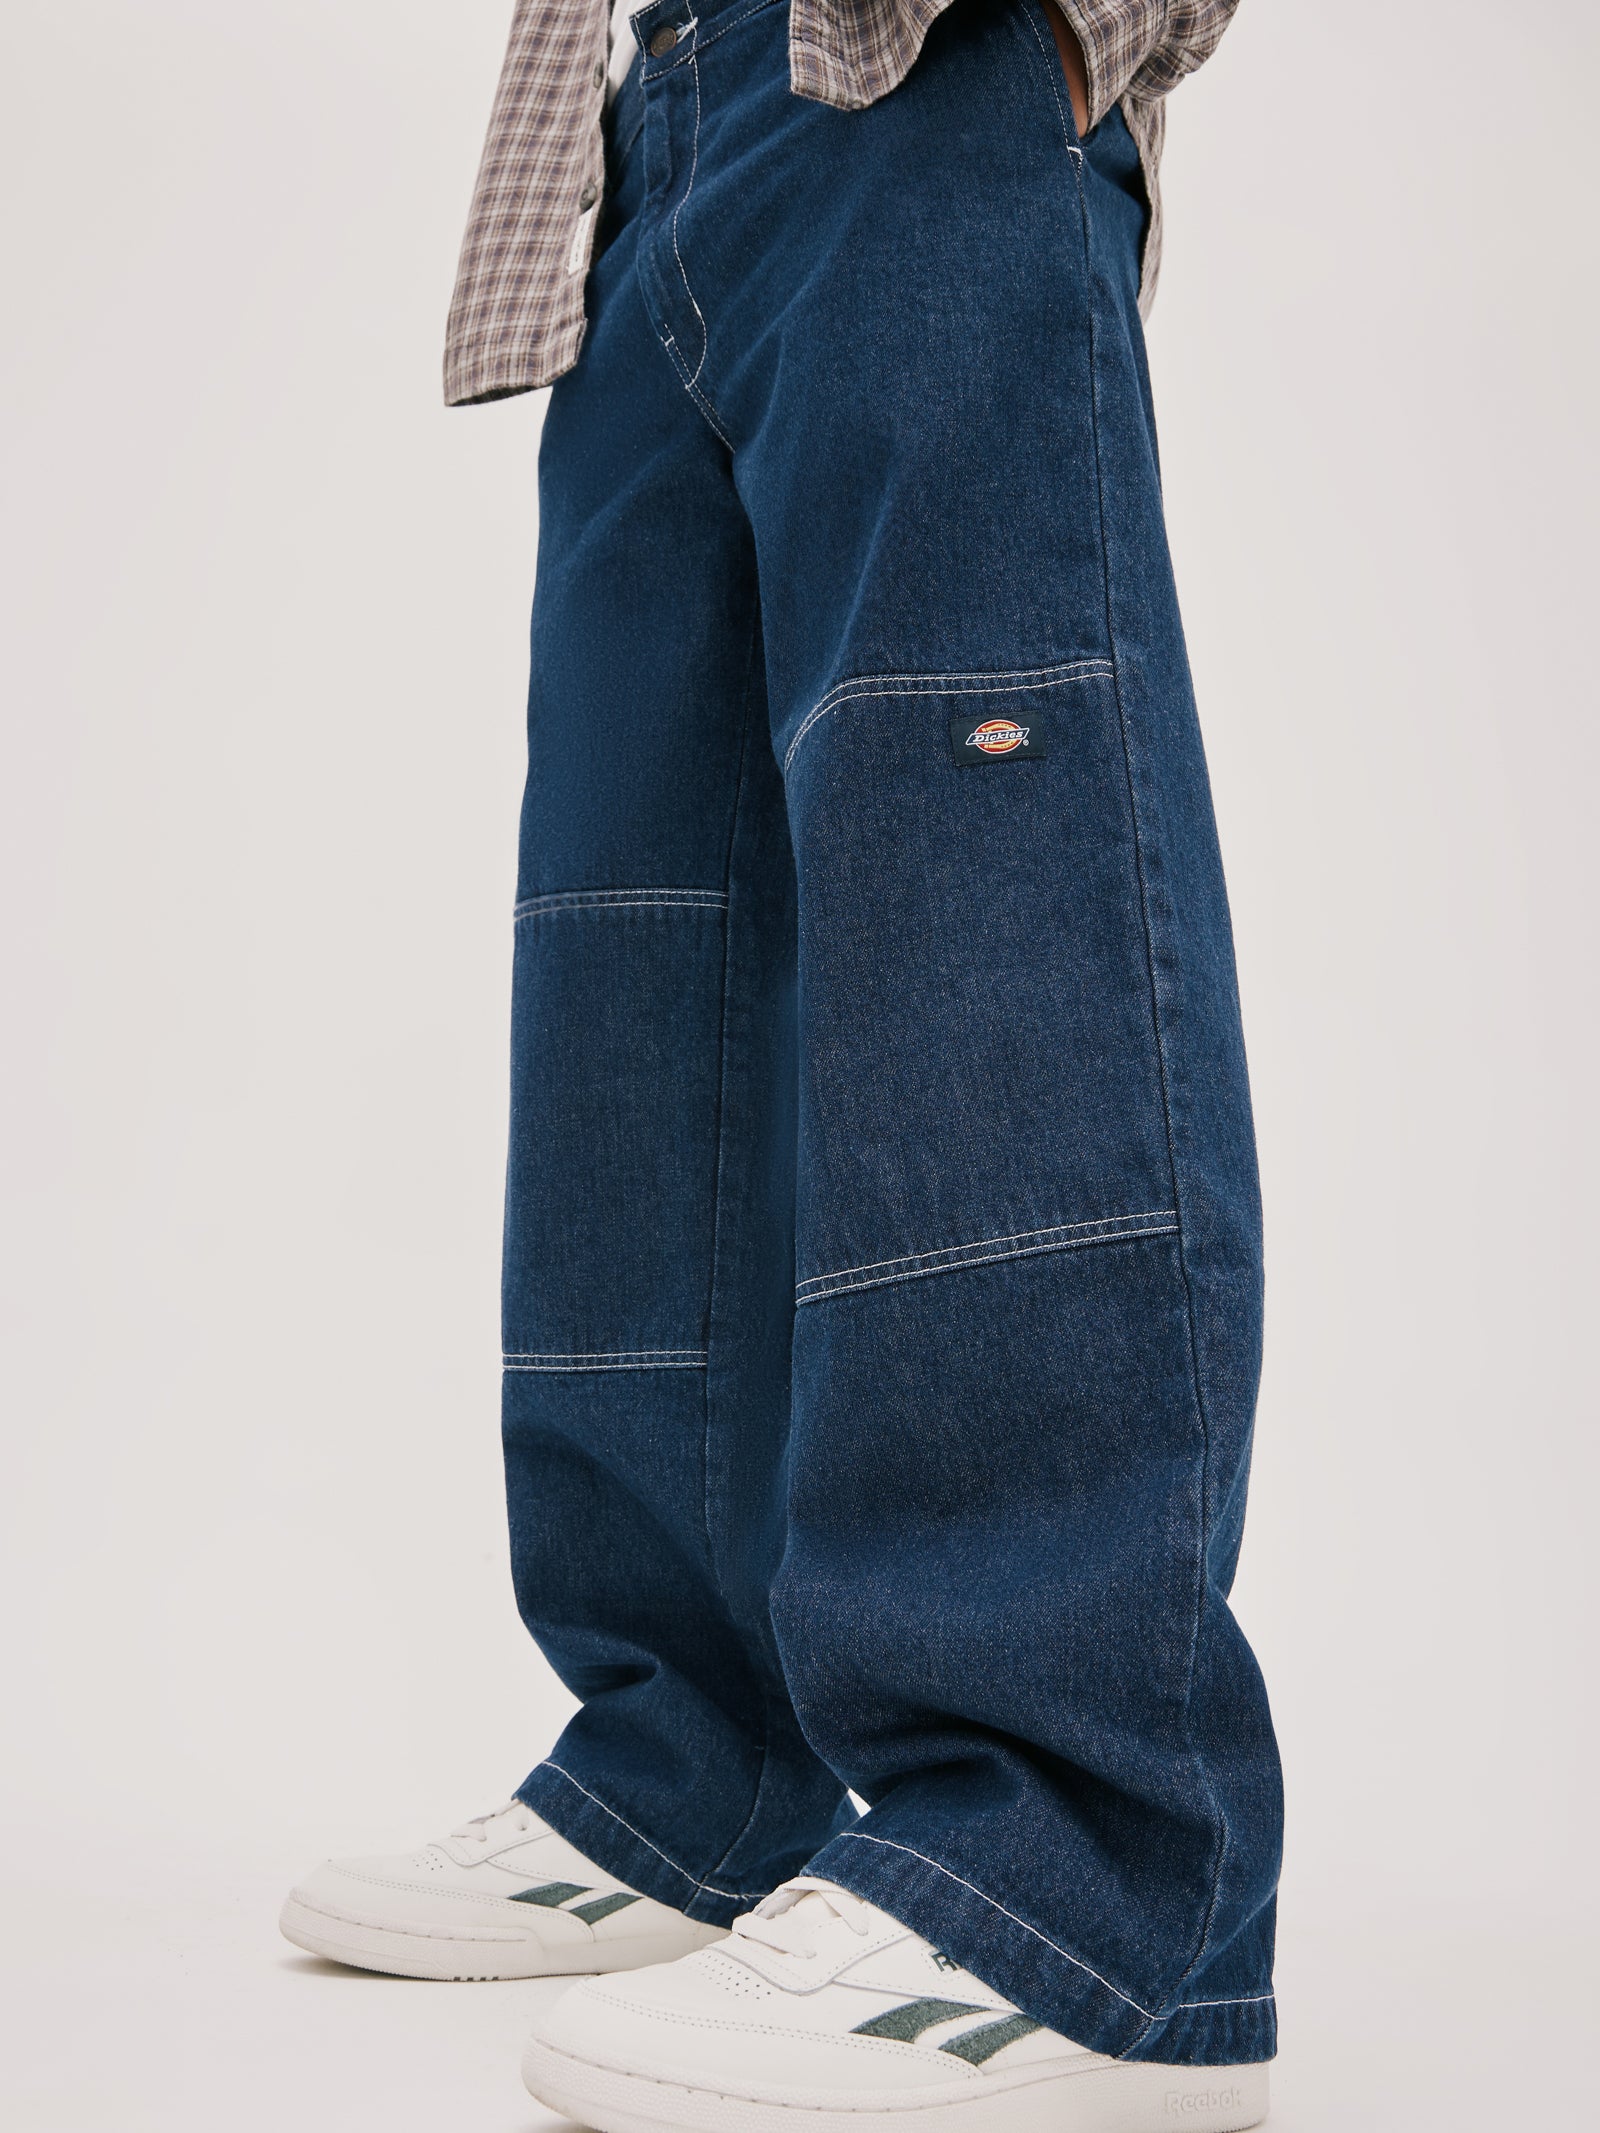 85-283AU Double Knee Jeans in Rinsed Indigo Blue - Glue Store